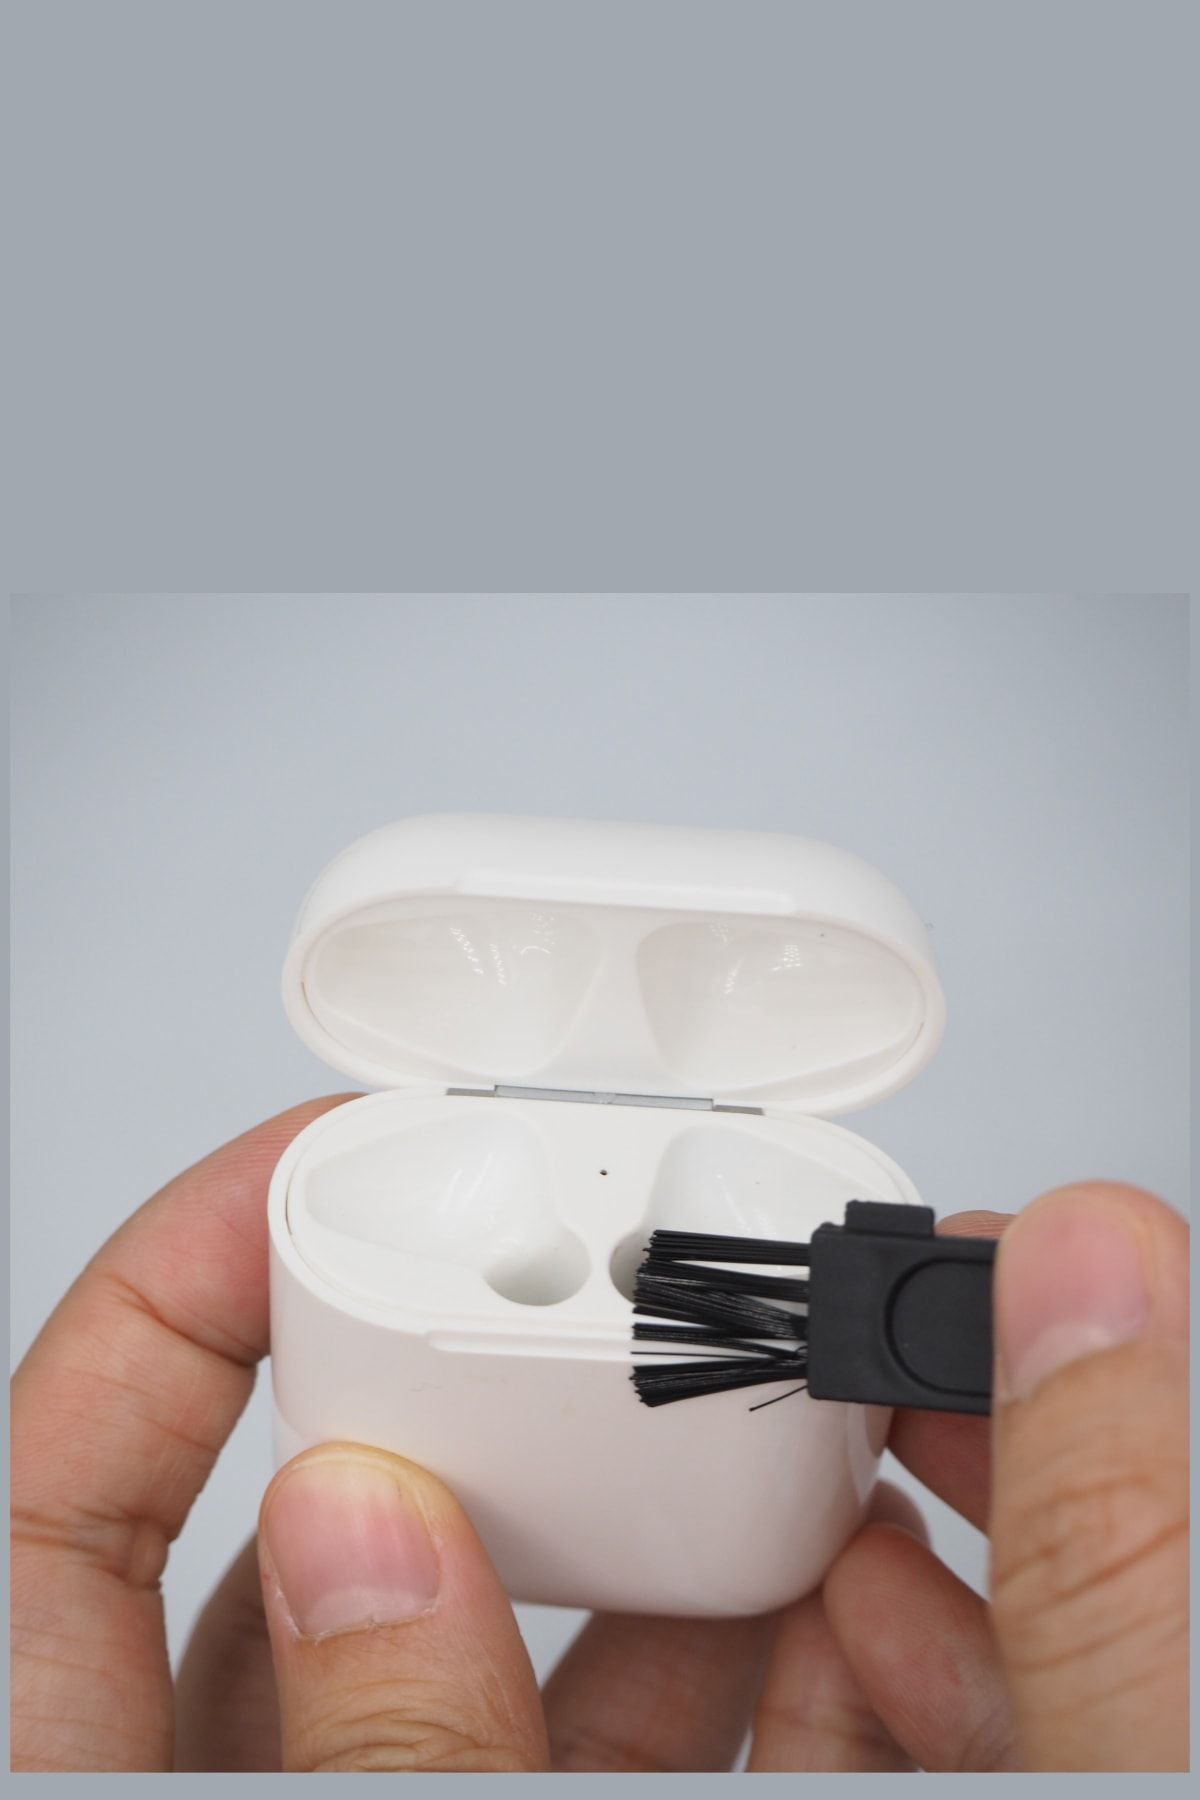 Mcstorey Telefon Kulaklık Temizlik Kiti AirBuds Airpods Pro iPhone ile Uyumlu